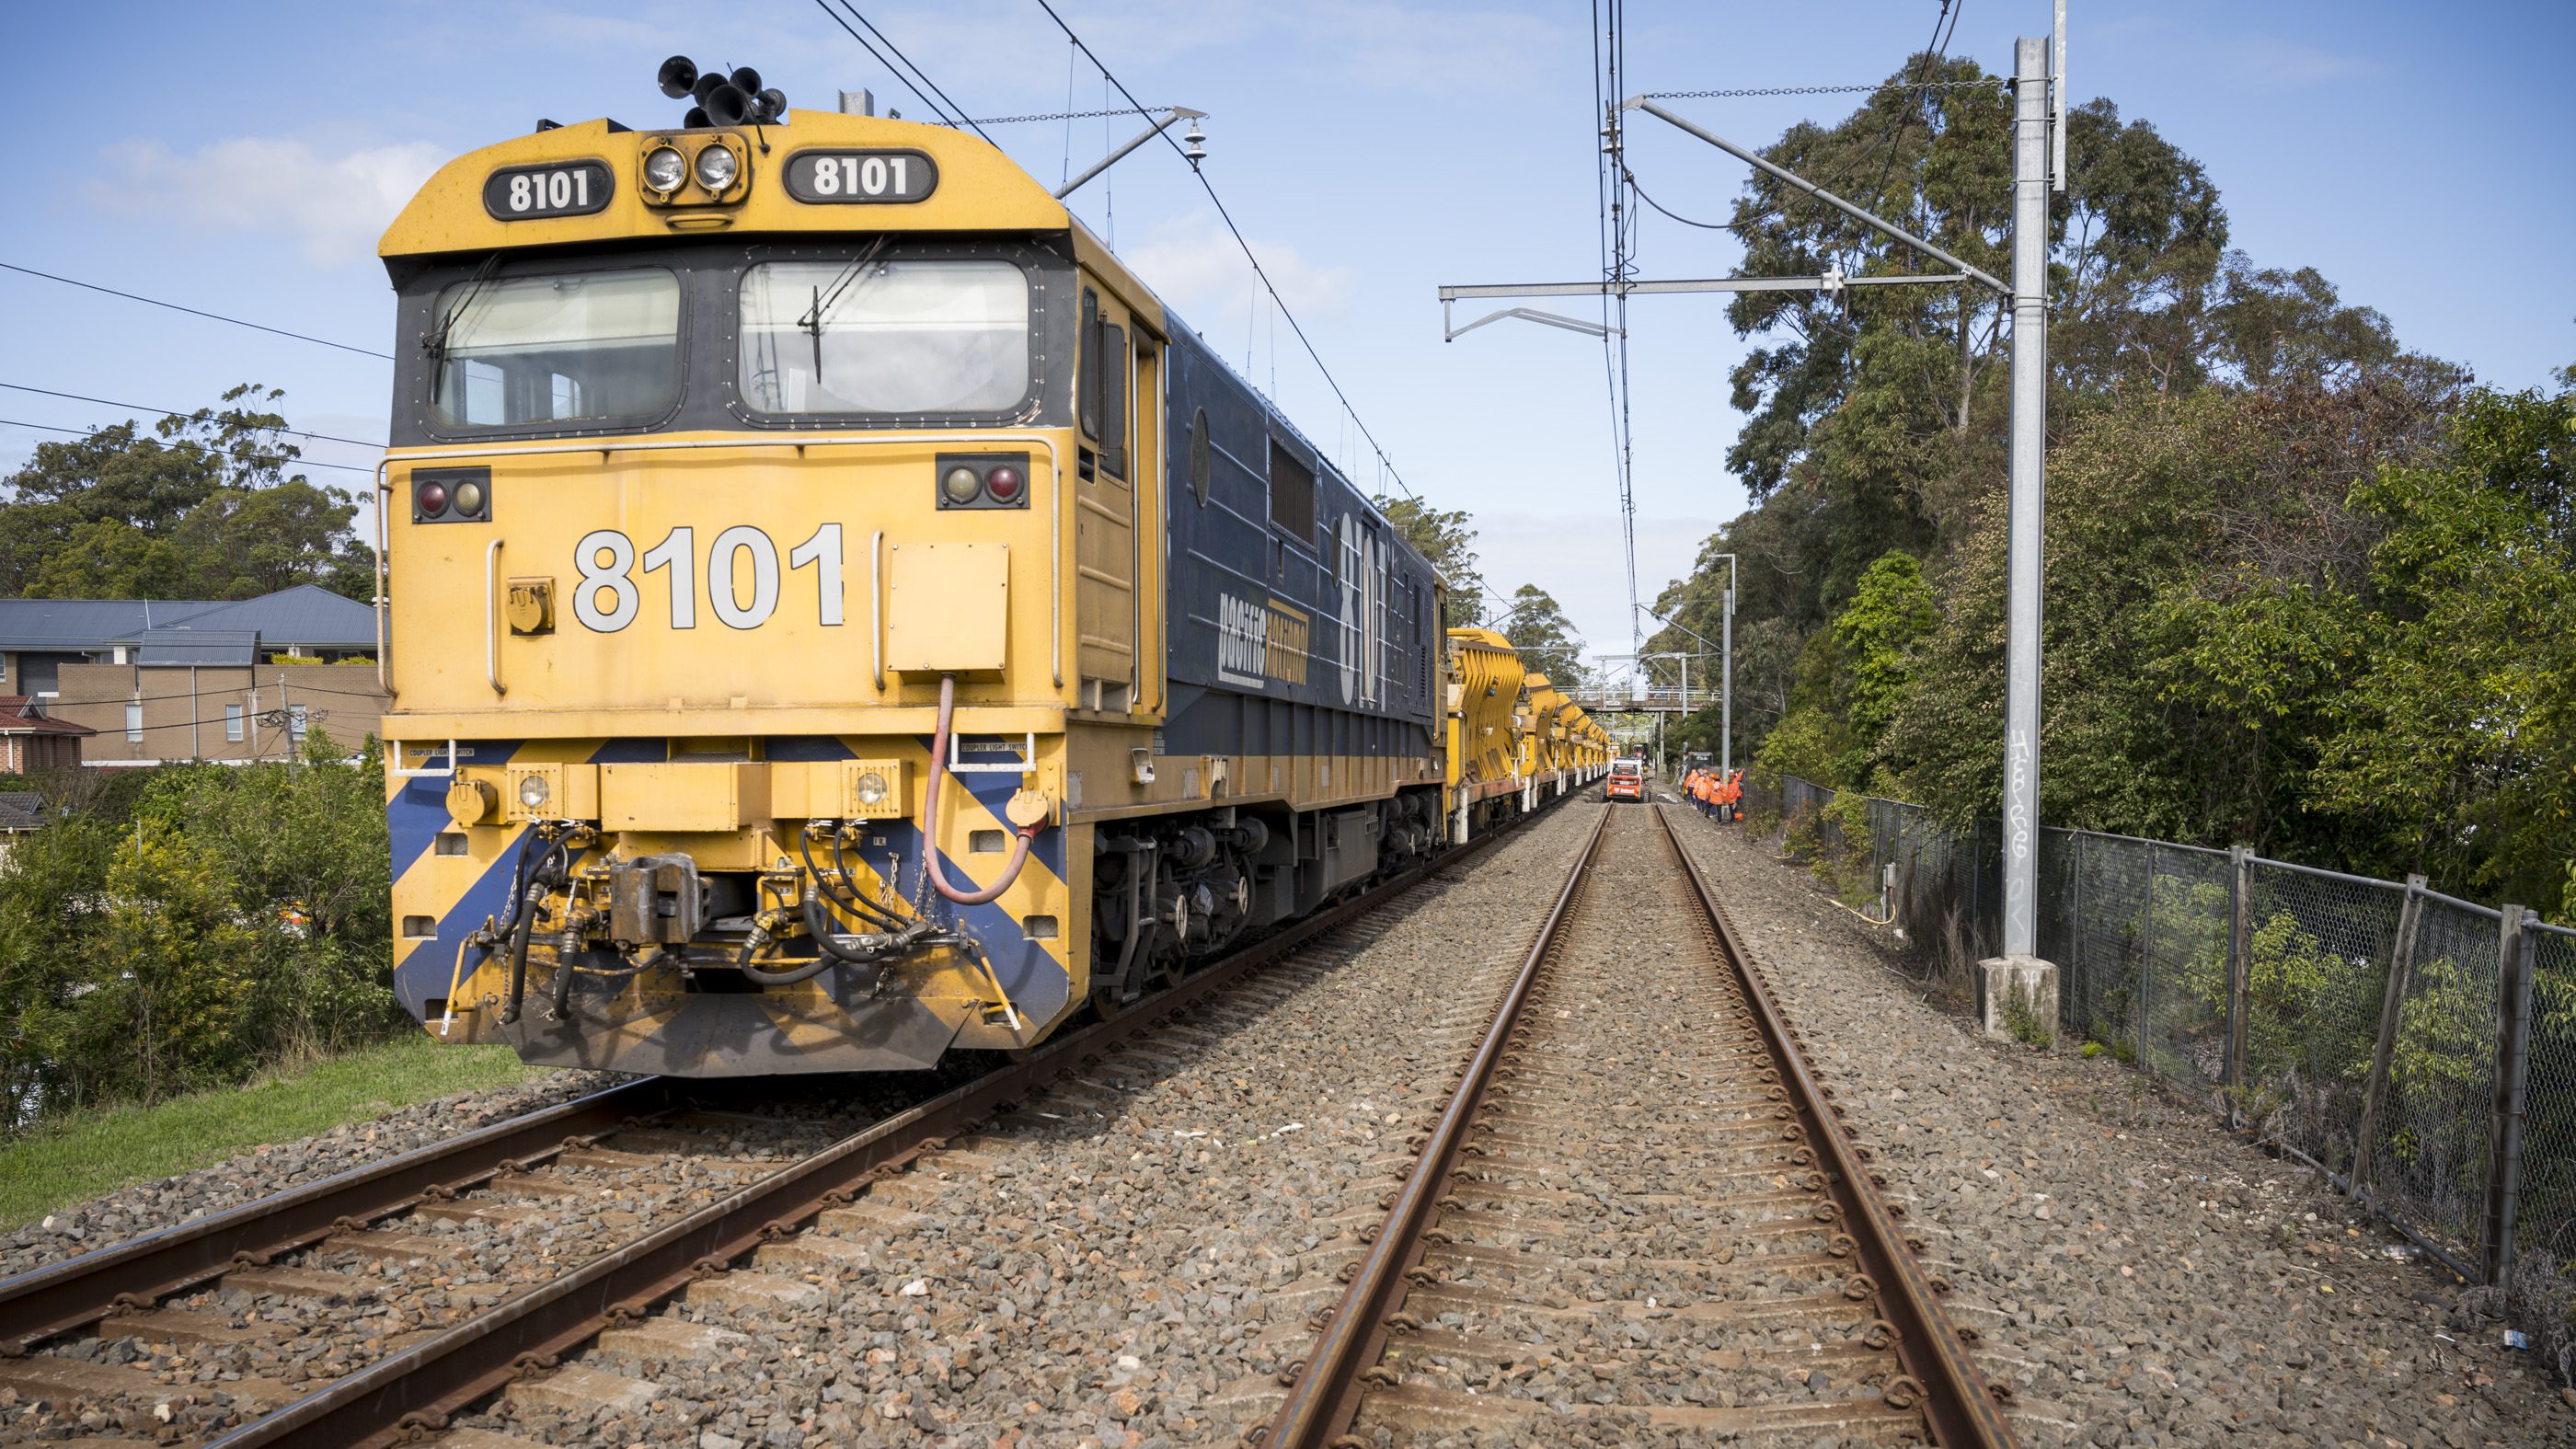 Sydney Trains industrial photography by Gavin Jowitt - Sydney Photographer